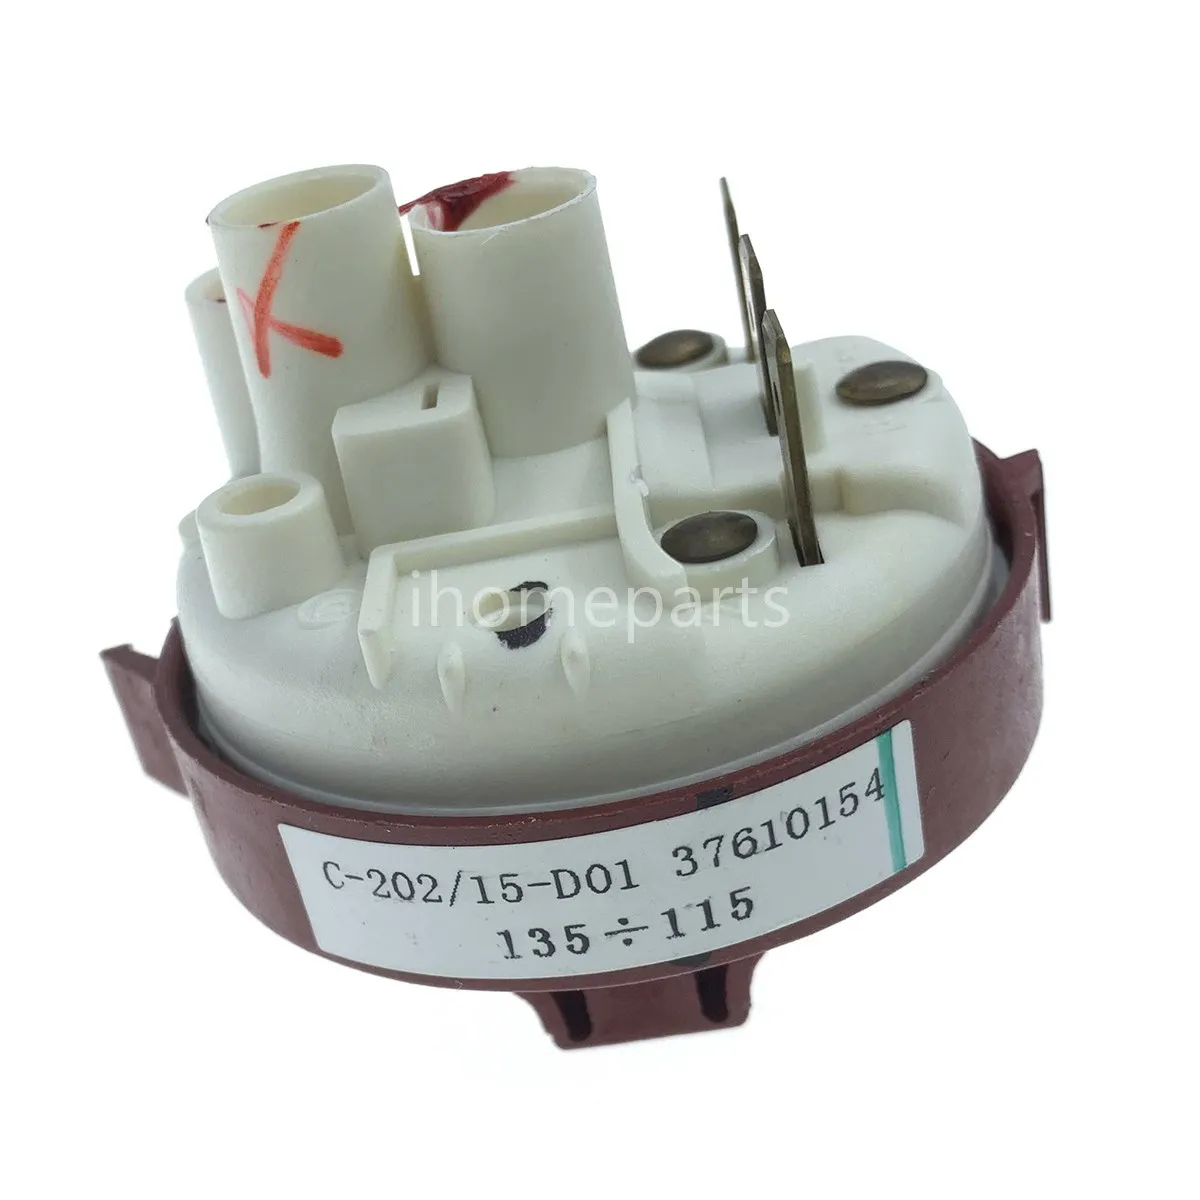 C-202/15-D01 37610154 Dishwasher Parts Water Lever Pressure Switch for Hansa / Gorenje / Candy / Samsung